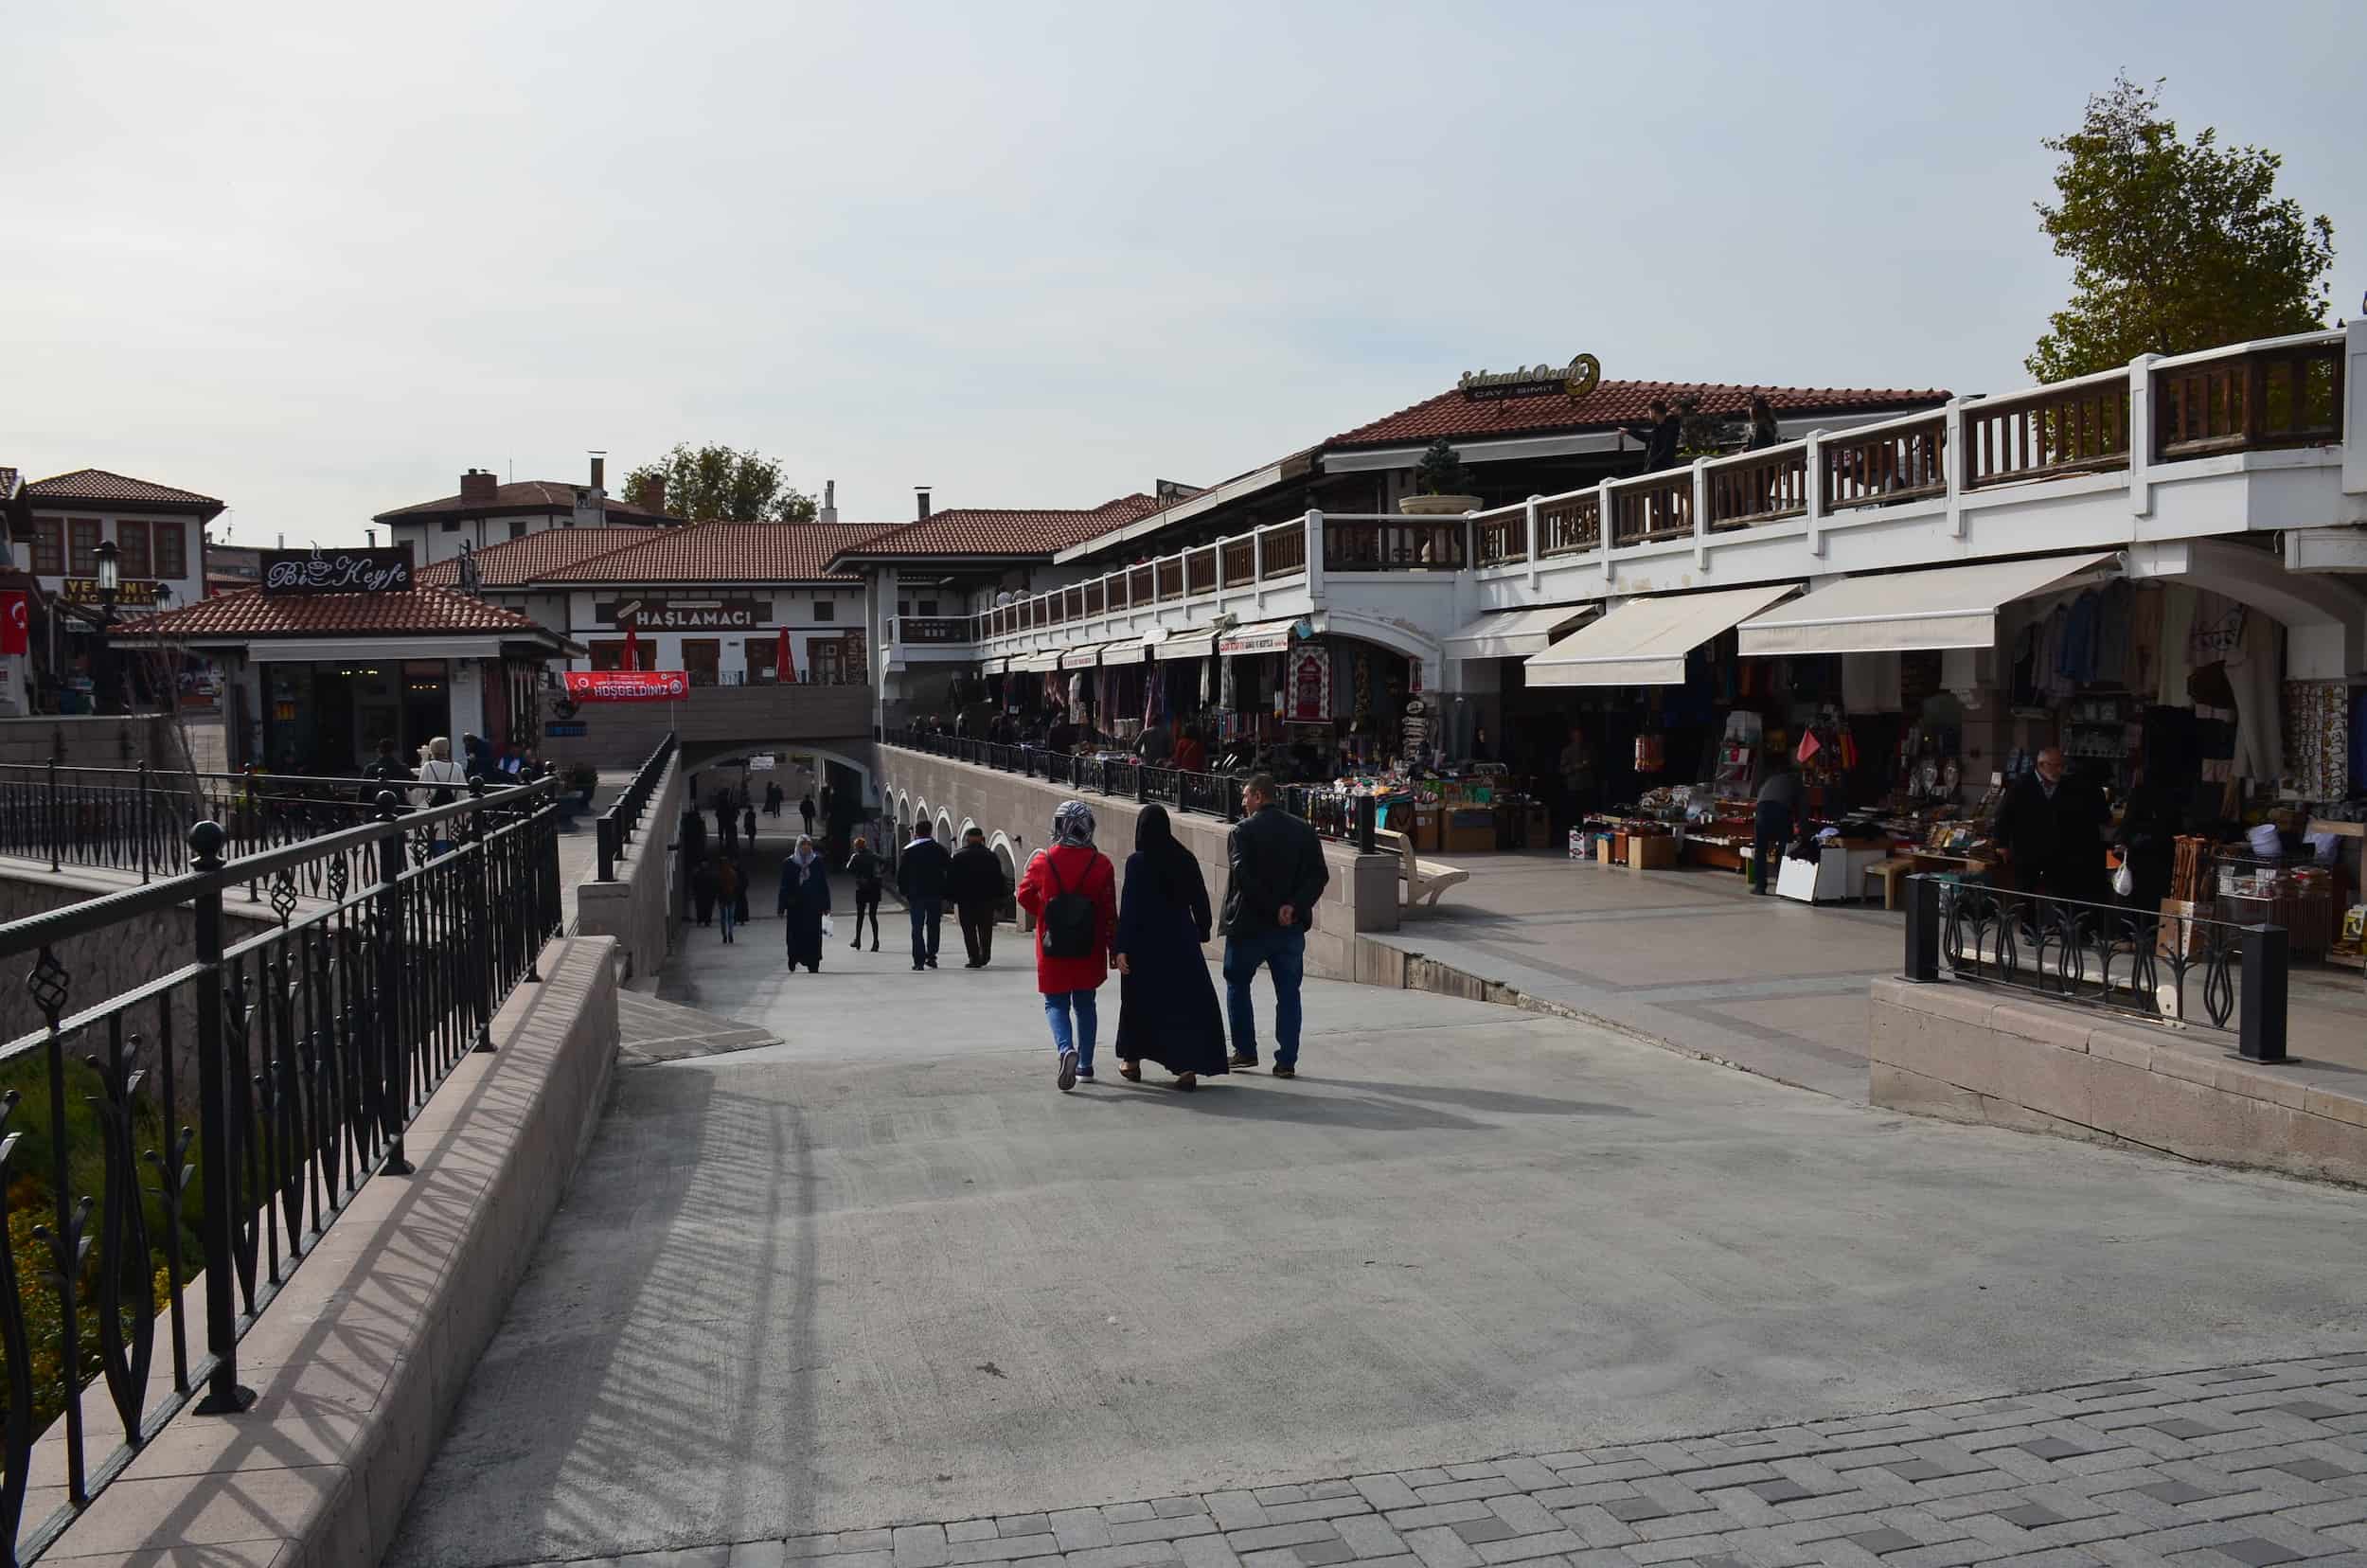 An underpass next to a street full of shops in Hacıbayram, Ulus, Ankara, Turkey